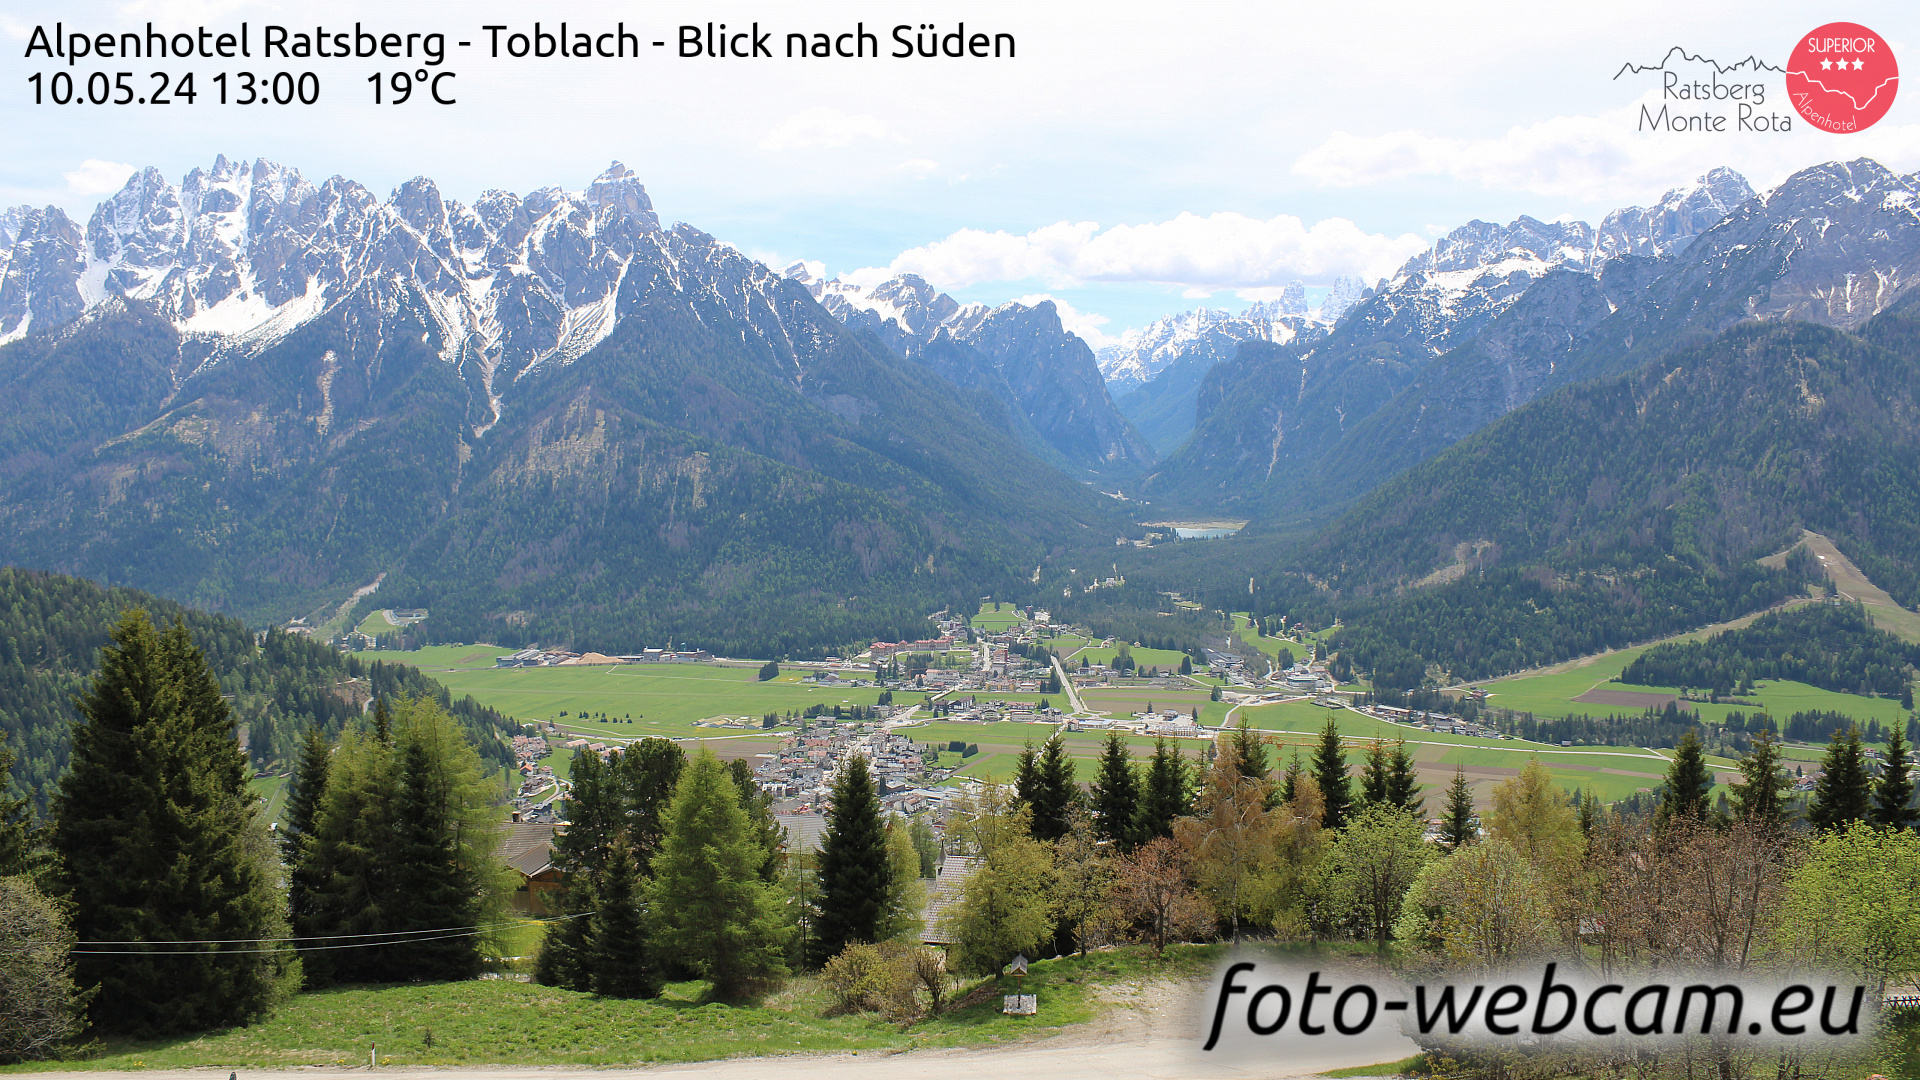 Toblach (Dolomites) Thu. 13:03